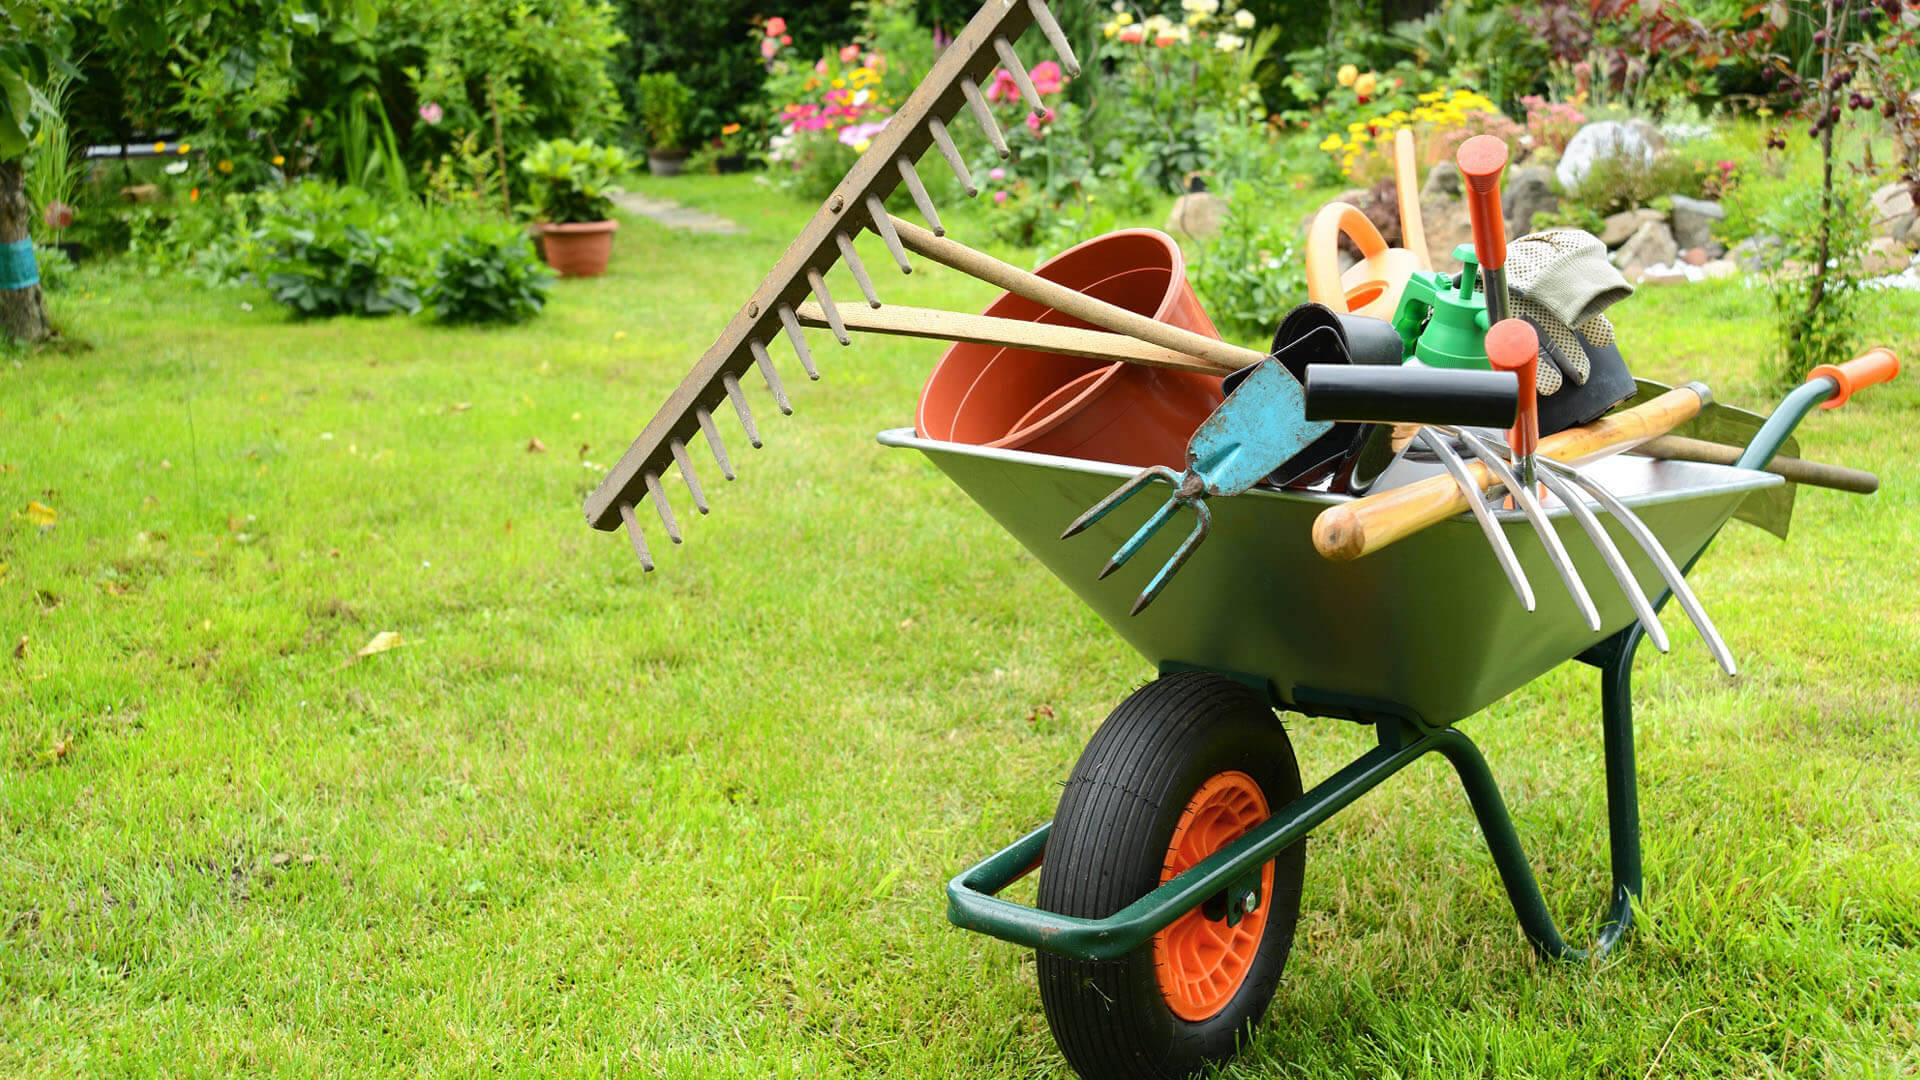 Caption: Enchanting Gardening Tools in Lush Green Backyard Wallpaper